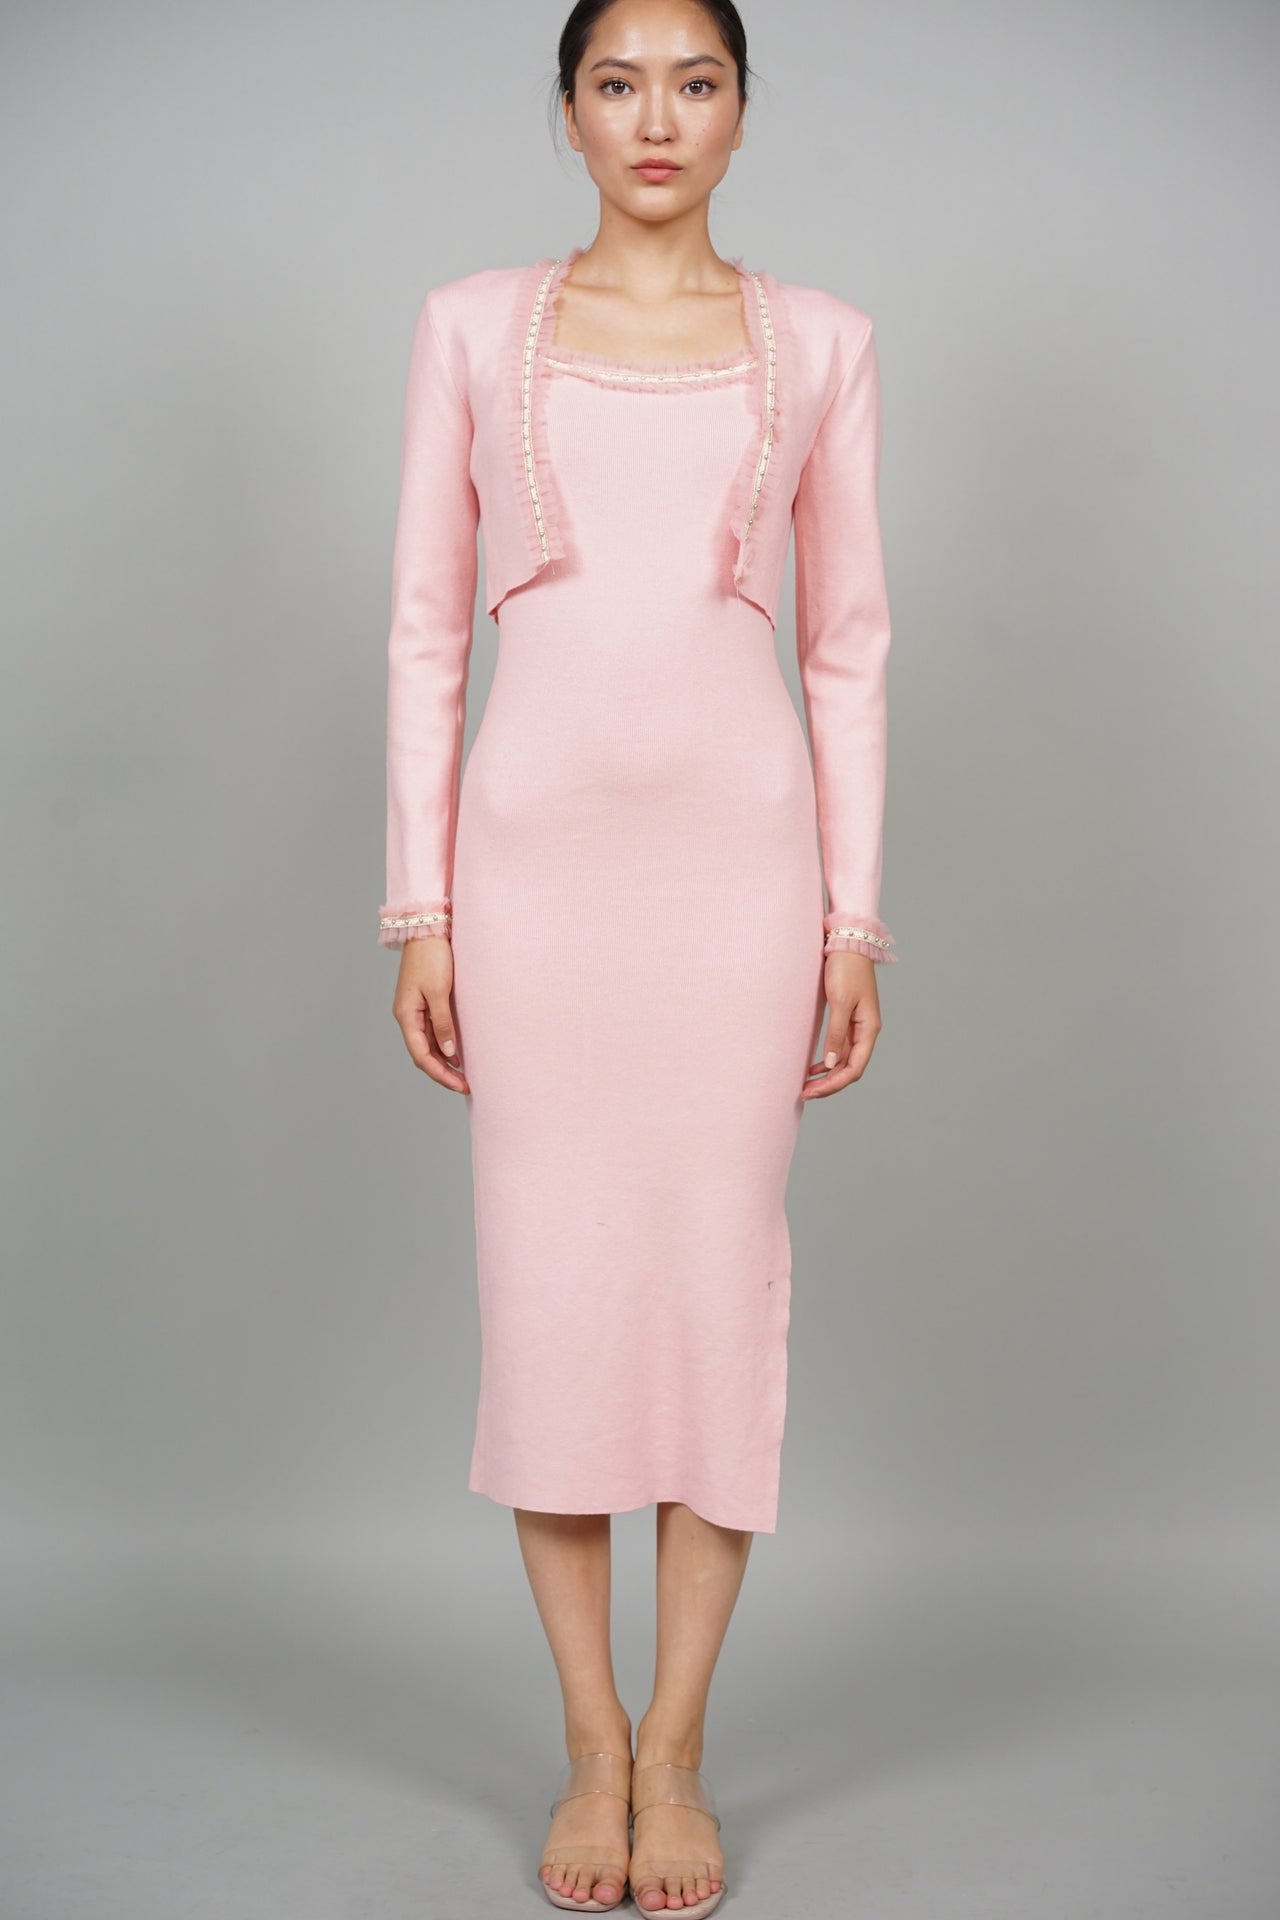 EVERYDAY / Prisca Cardigan Dress Set in Pink